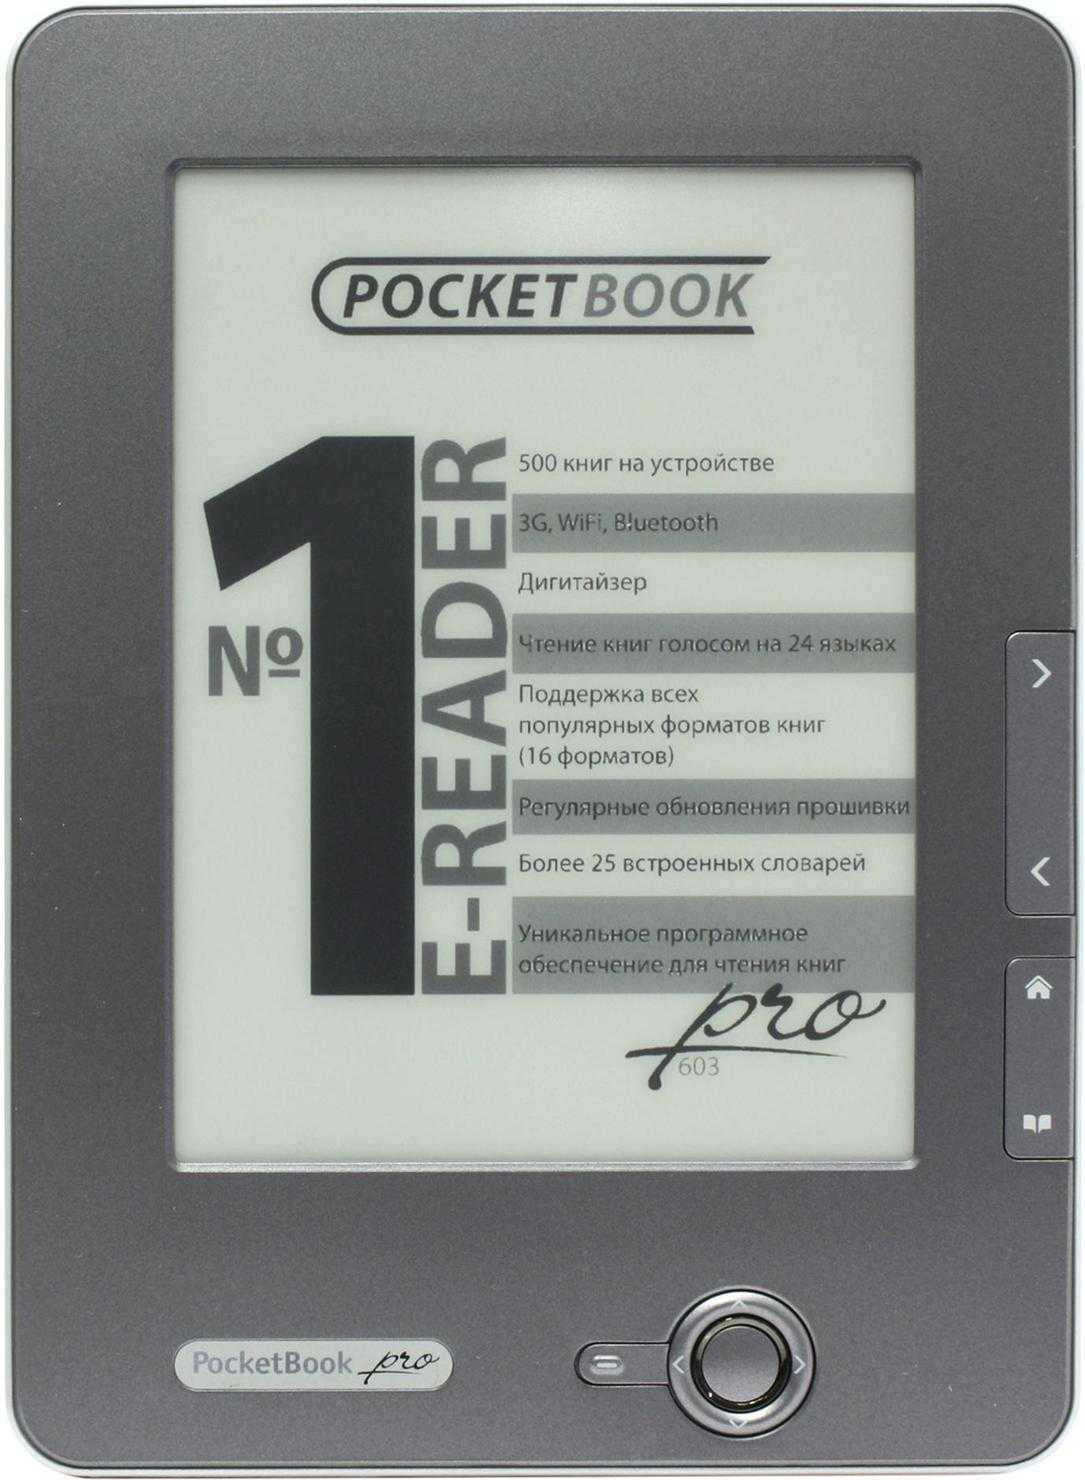 Pocketbook pro 603